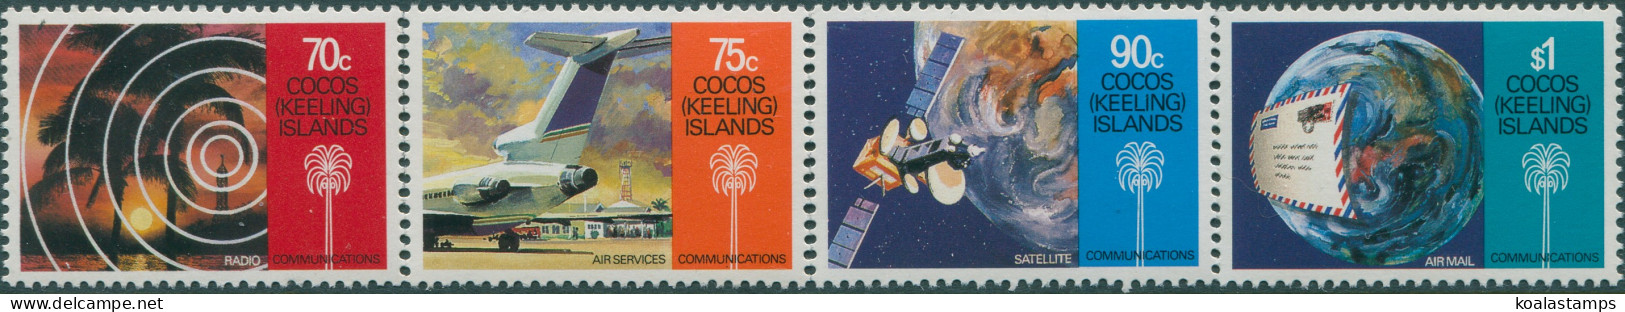 Cocos Islands 1987 SG165-168 Communications MNH - Kokosinseln (Keeling Islands)